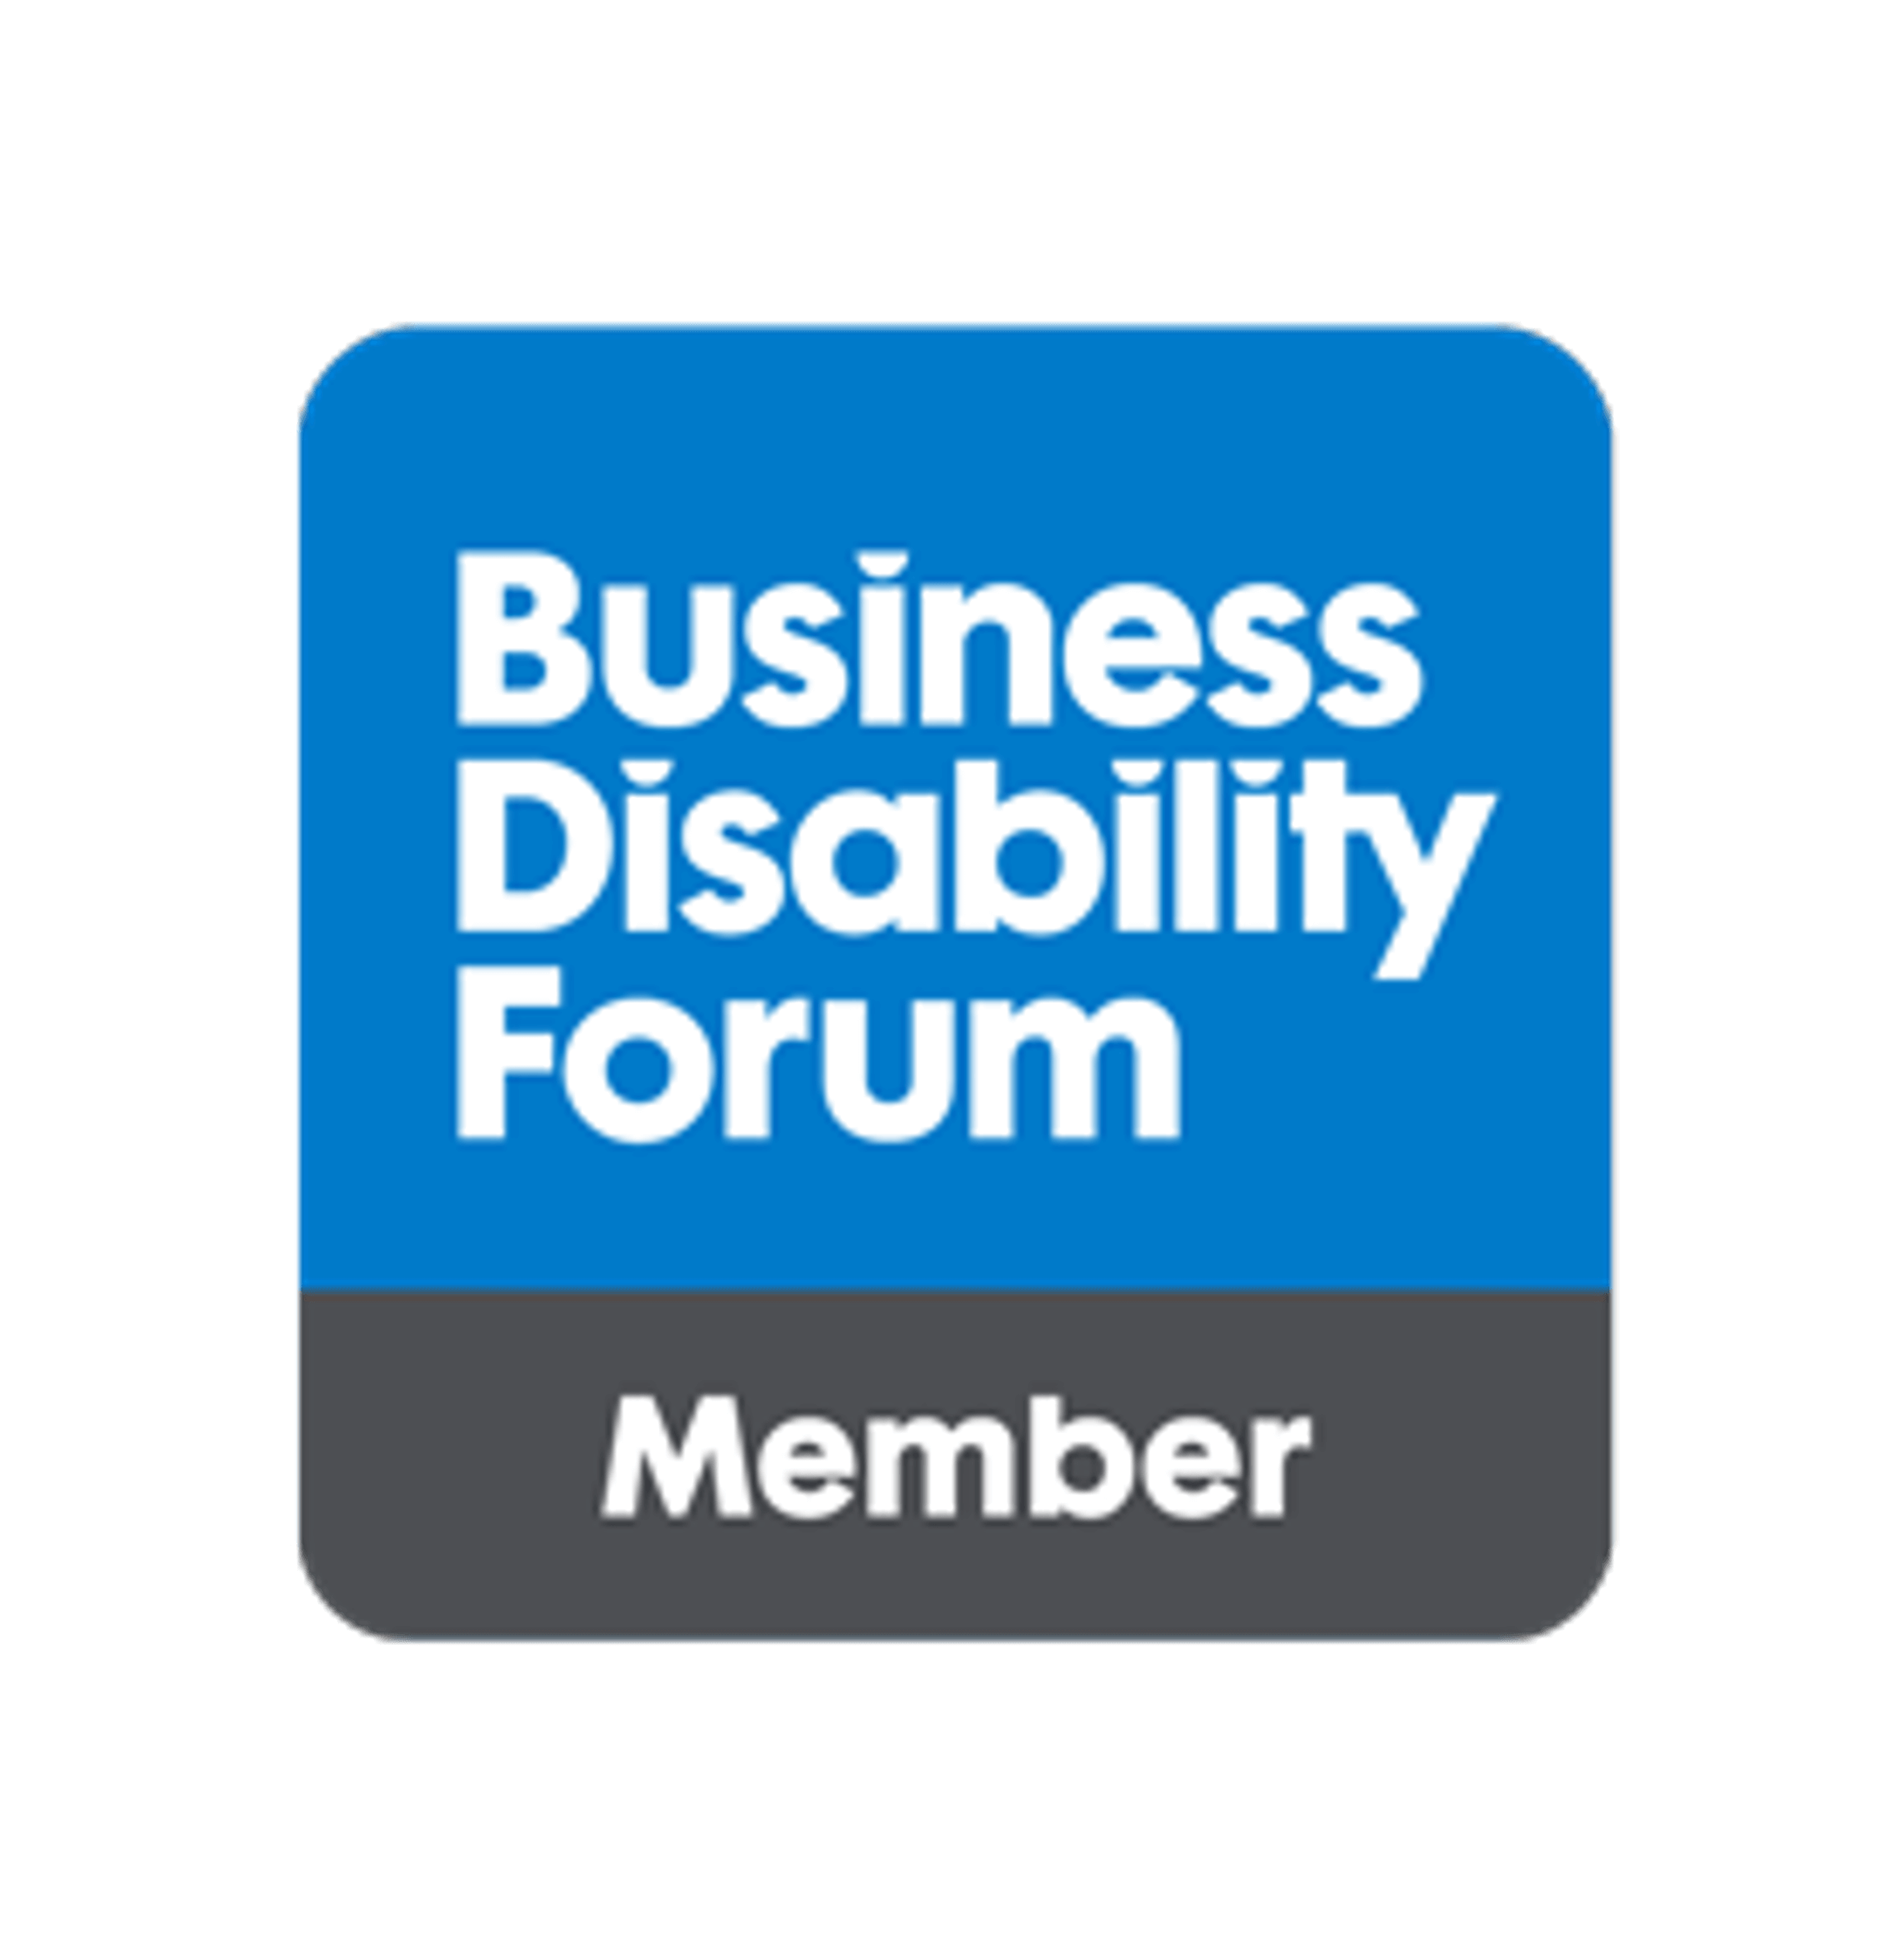 Met Office Jobs - Careers Website - Business Disability Forum Logo.png